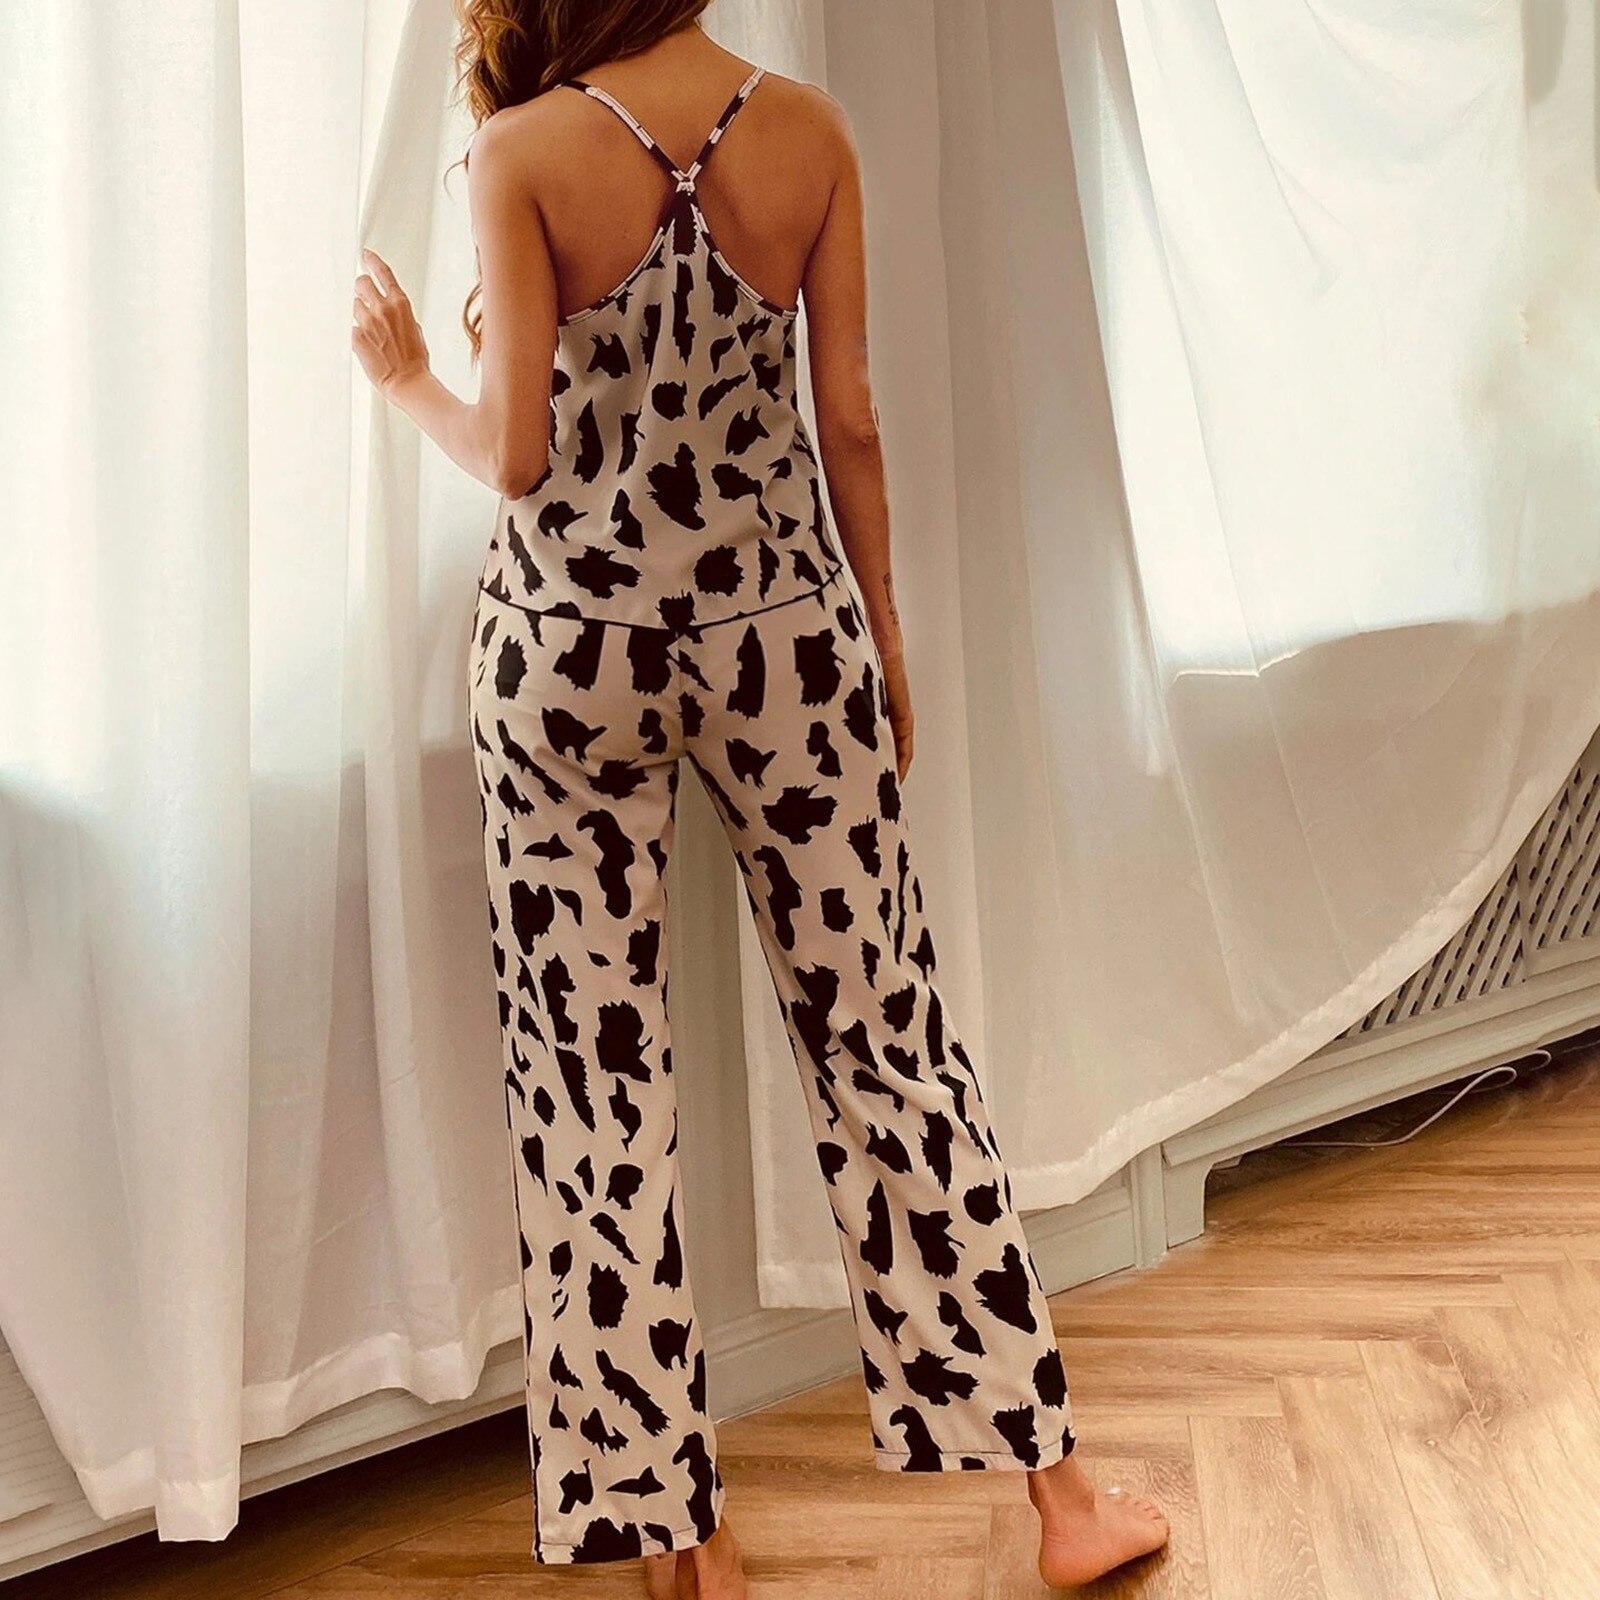 Pajamas For Women Fashion Milk Cow Prints Sling Pyjama Pour Femme Sexy Lingerie Summer Breathable Sleepwear 3 - The Cow Print